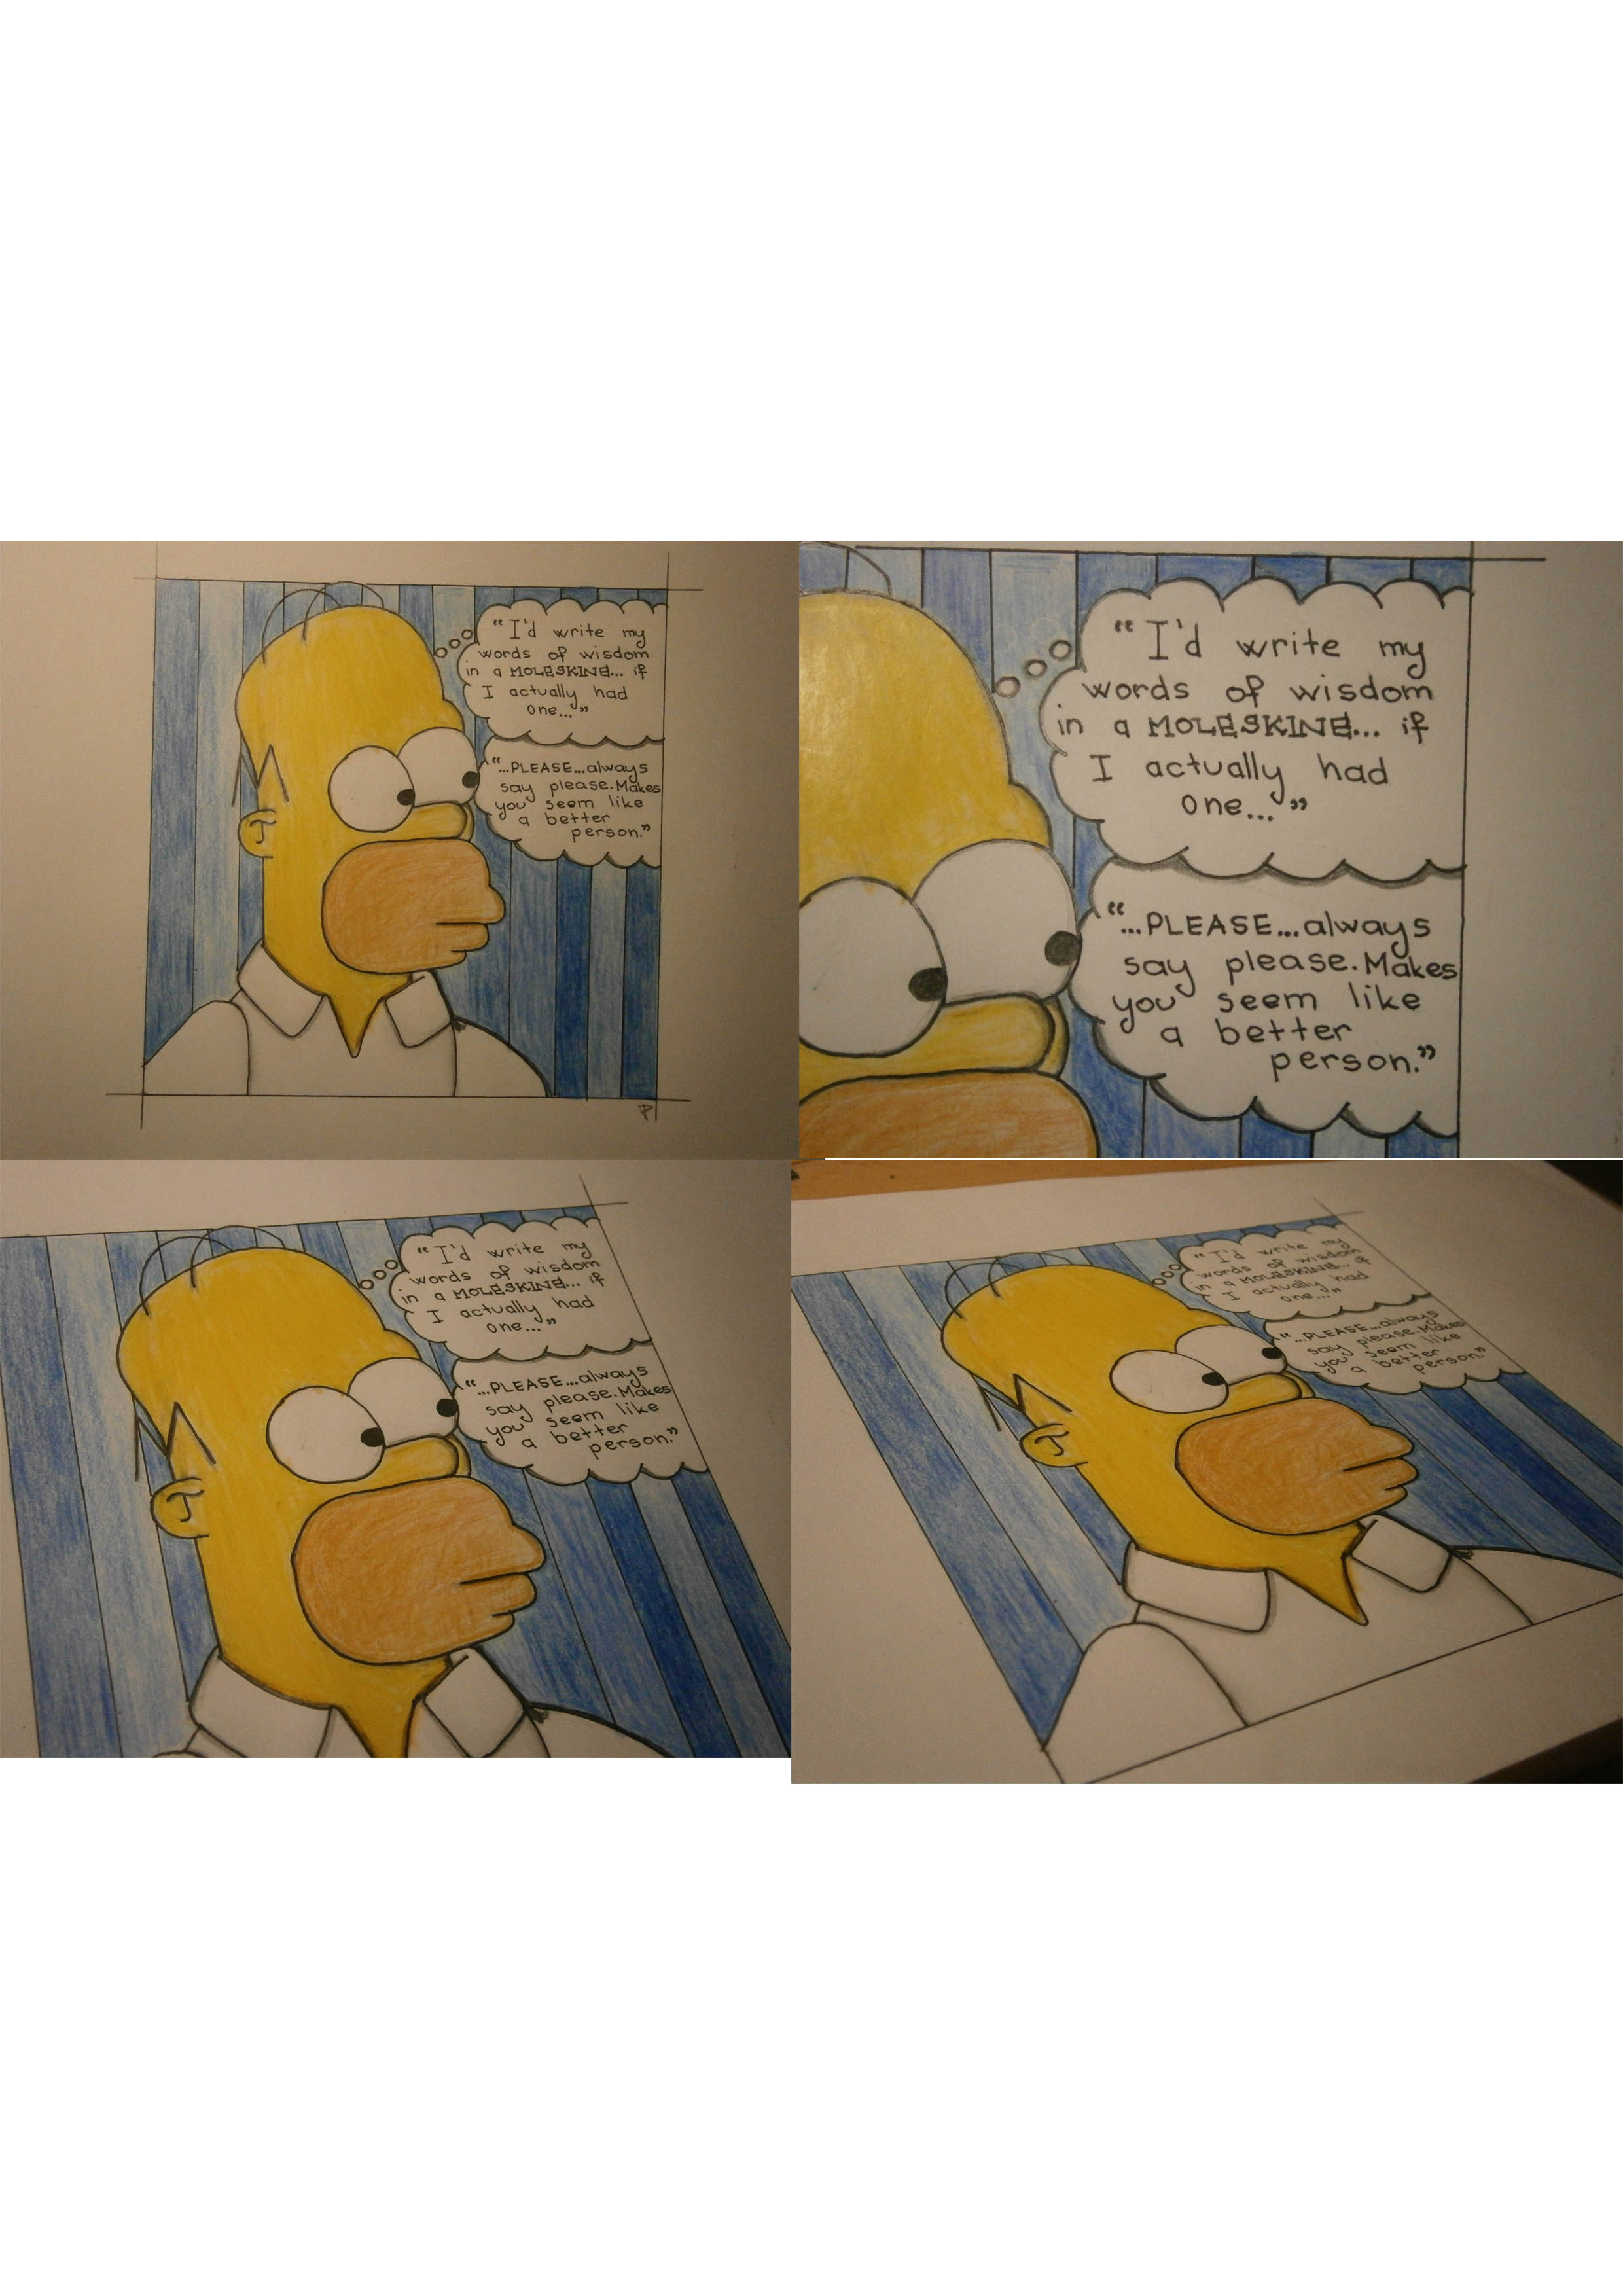 Homer’s word of wisdom